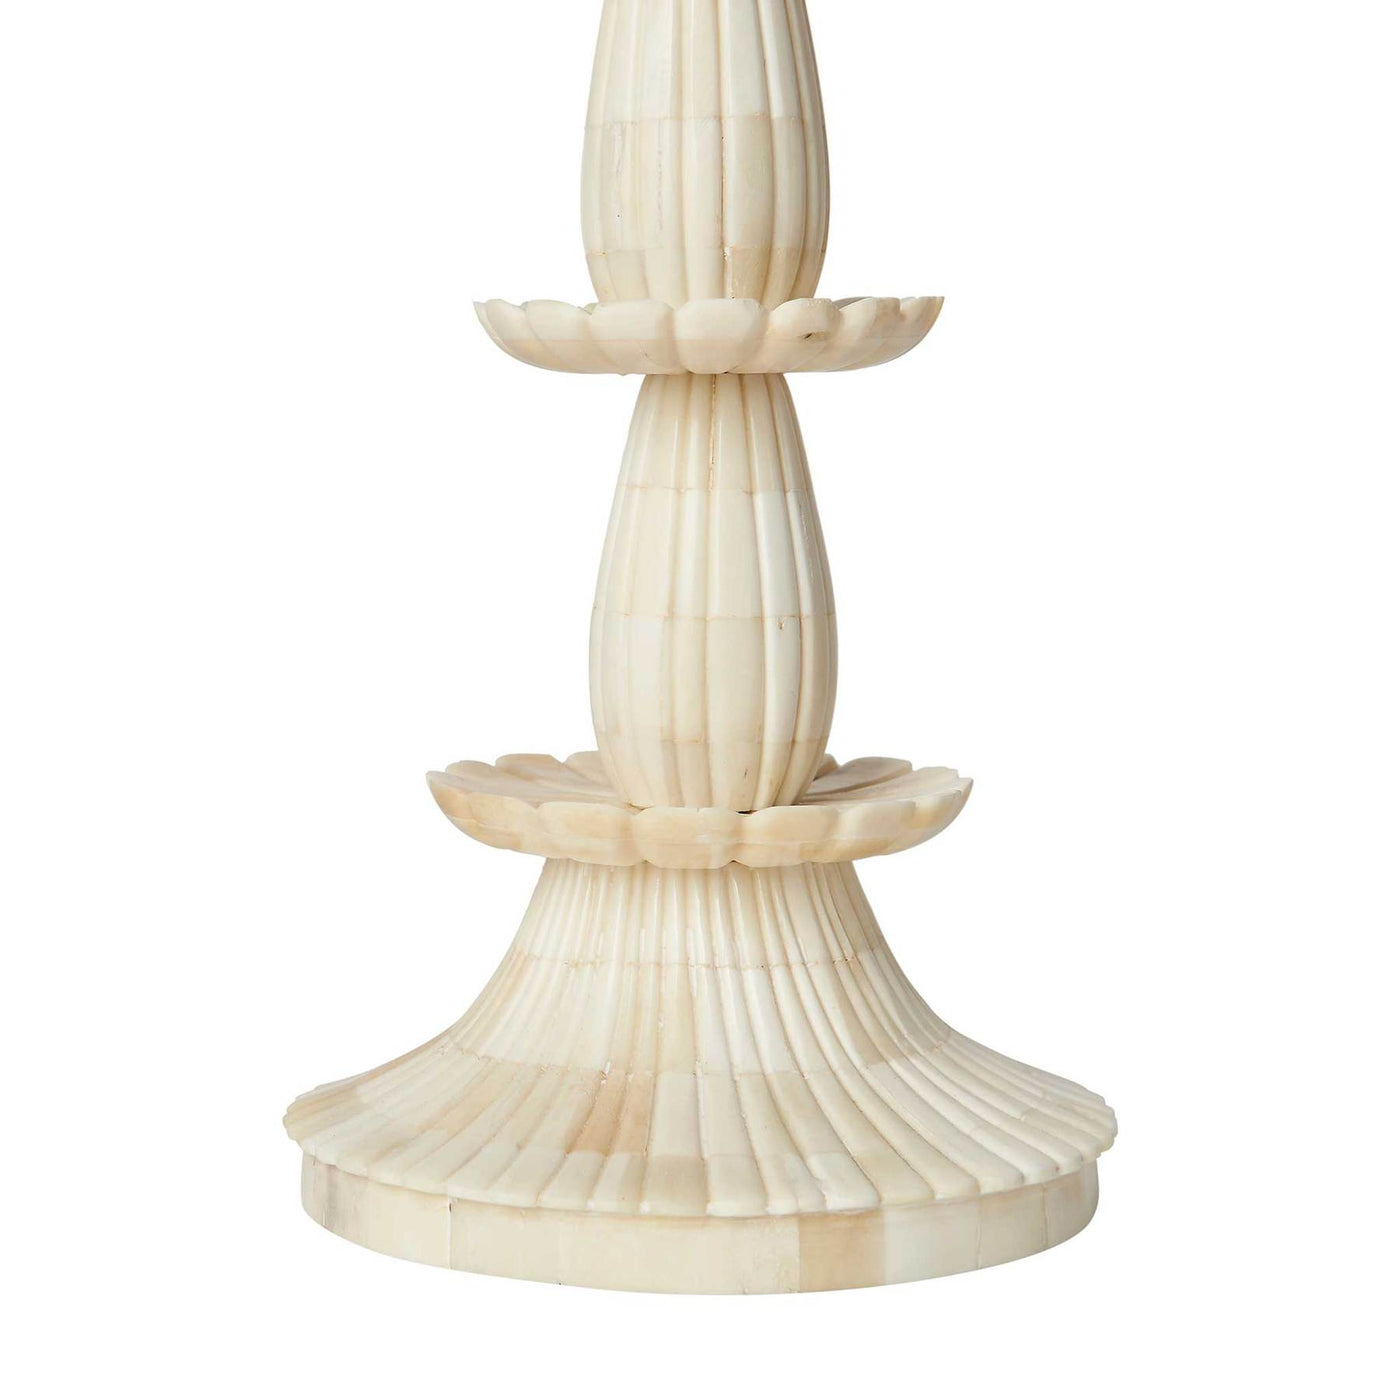 A Pair of Karni Mata Bone Inlay Table Lamps by Penny Morrison  | Newport Lamp And Shade | Located in Newport, RI